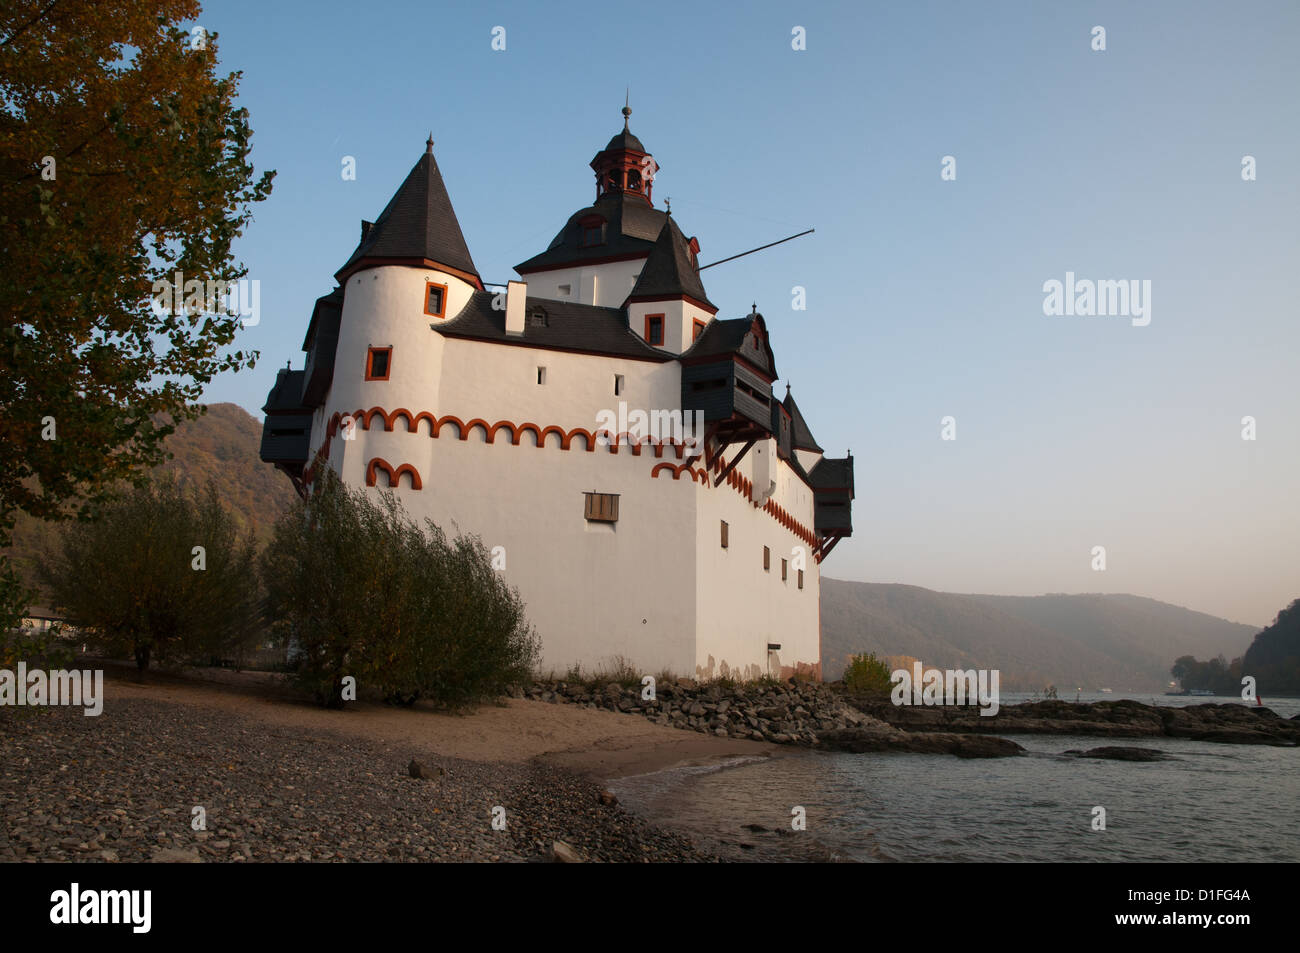 Toll castle Pfalzgrafenstein, Rhine valley, Germany Stock Photo